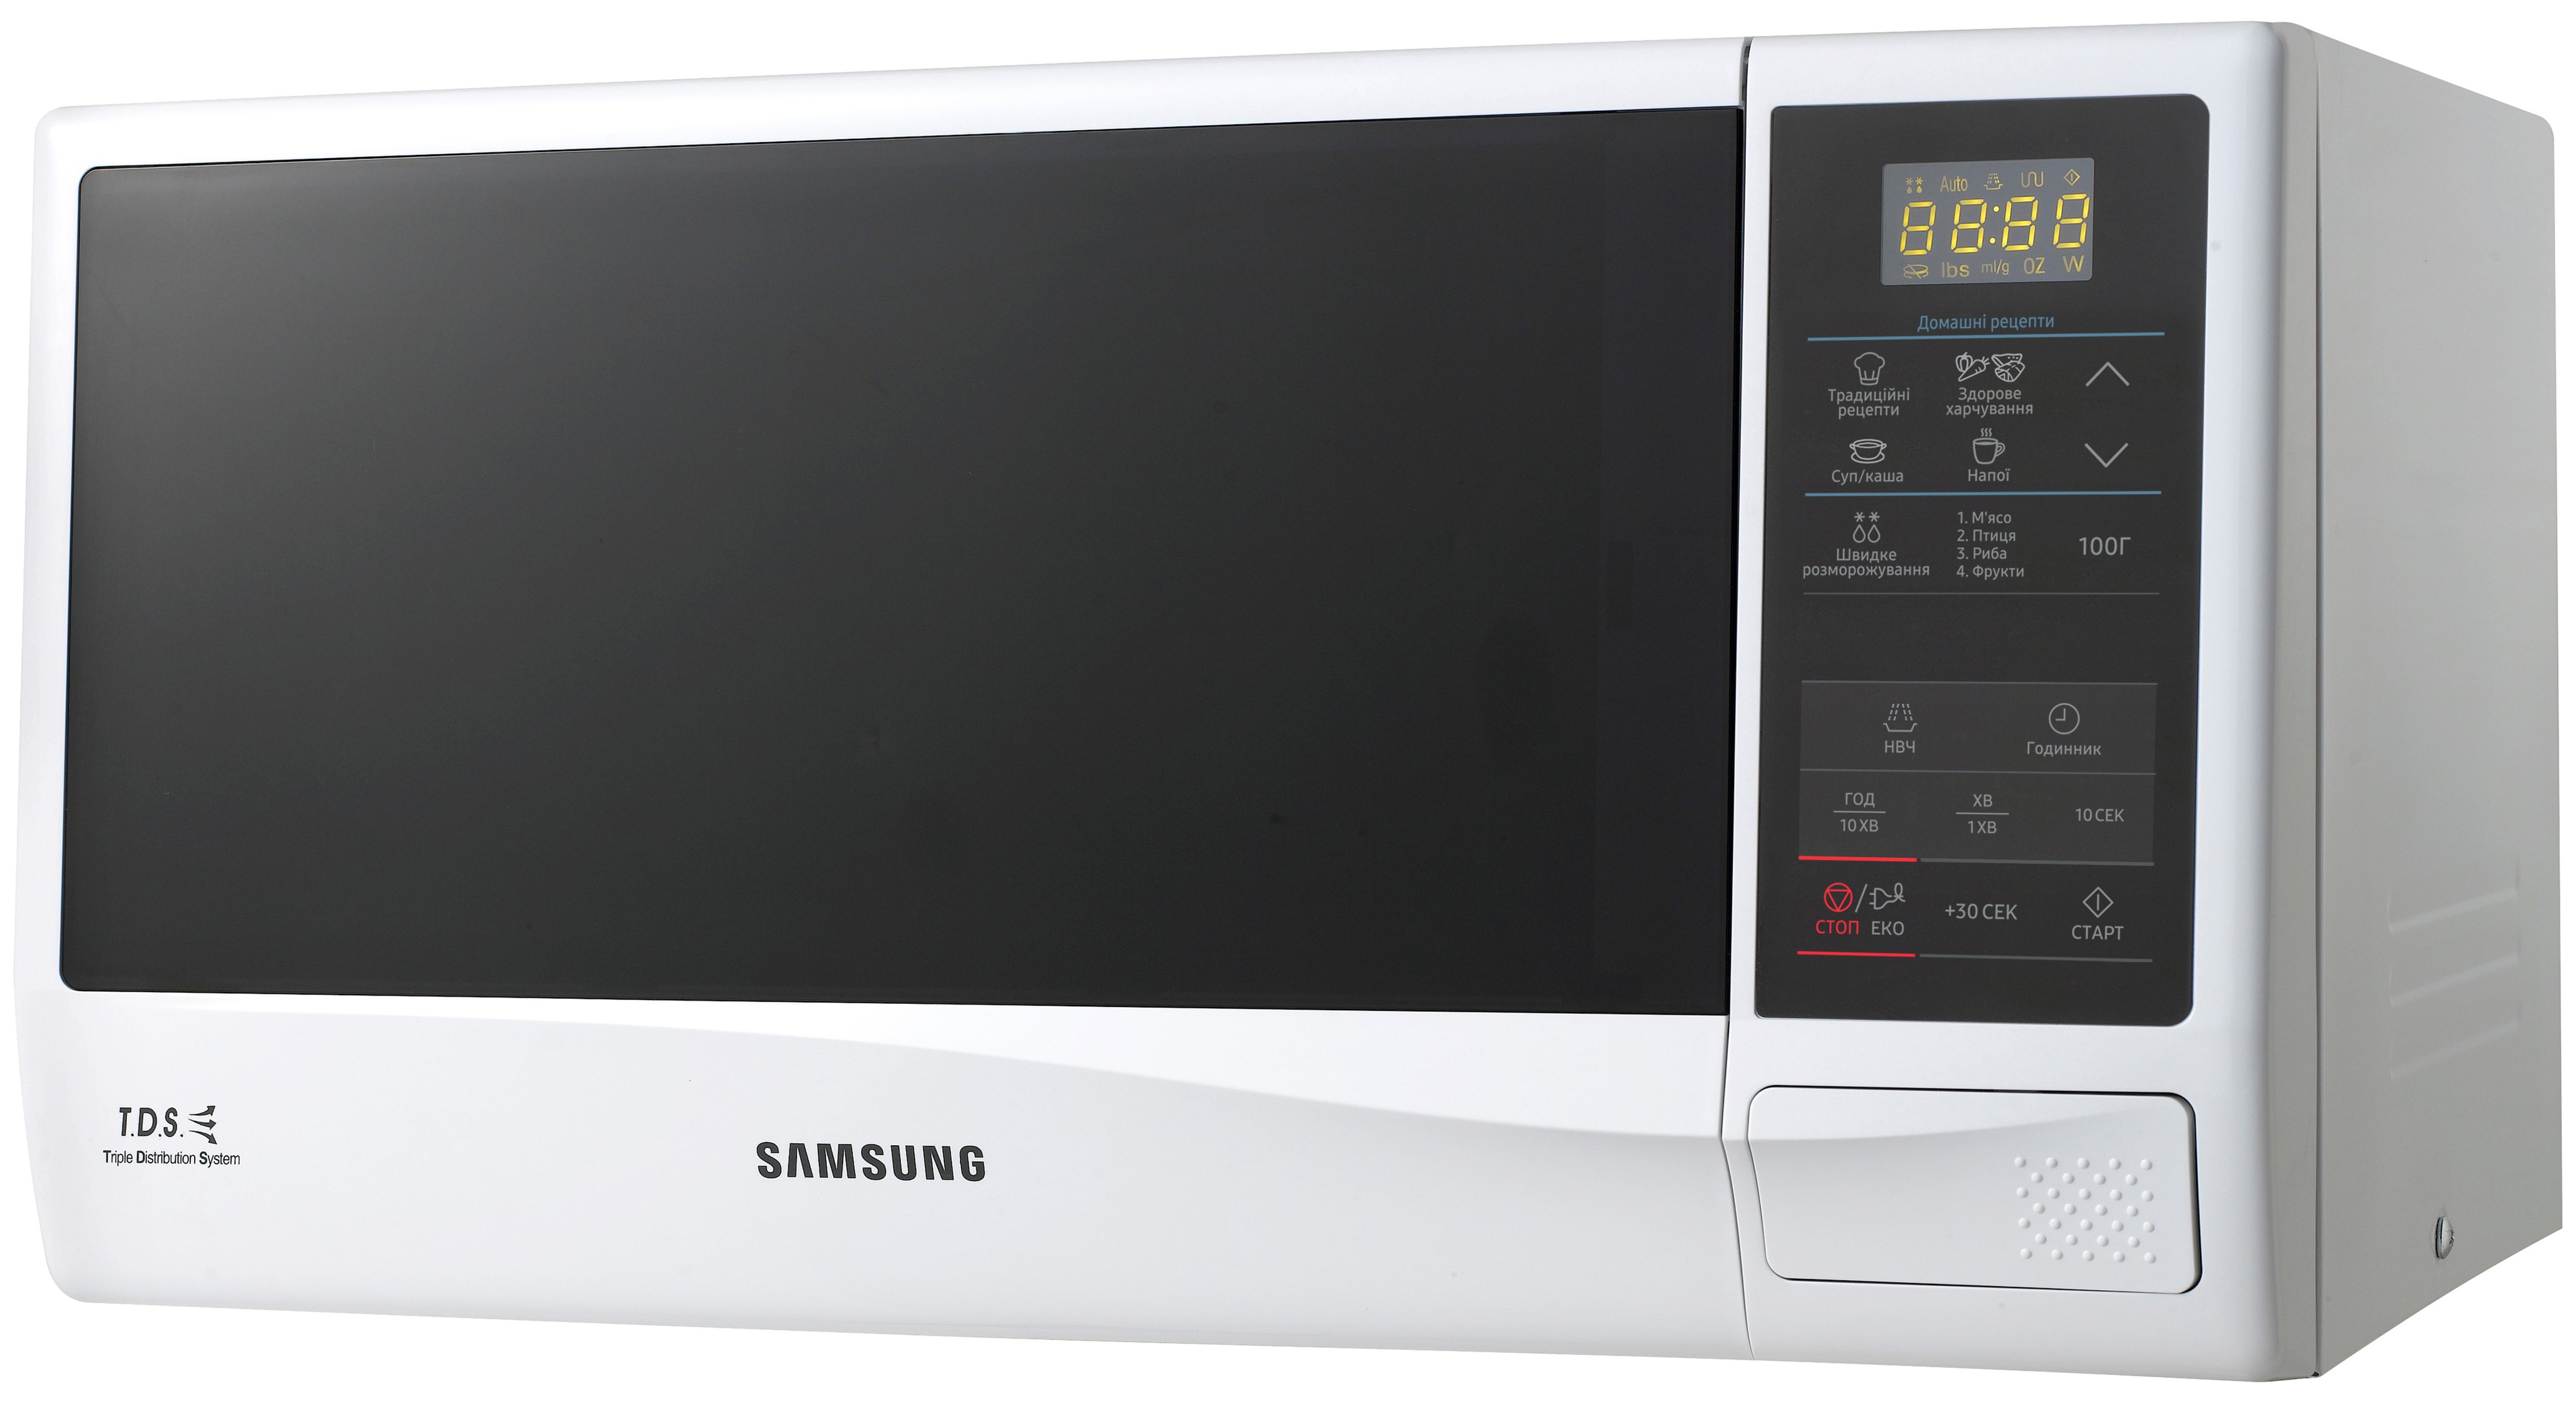 Микроволновая печь Samsung ME83KRW-2/BW цена 4199.00 грн - фотография 2